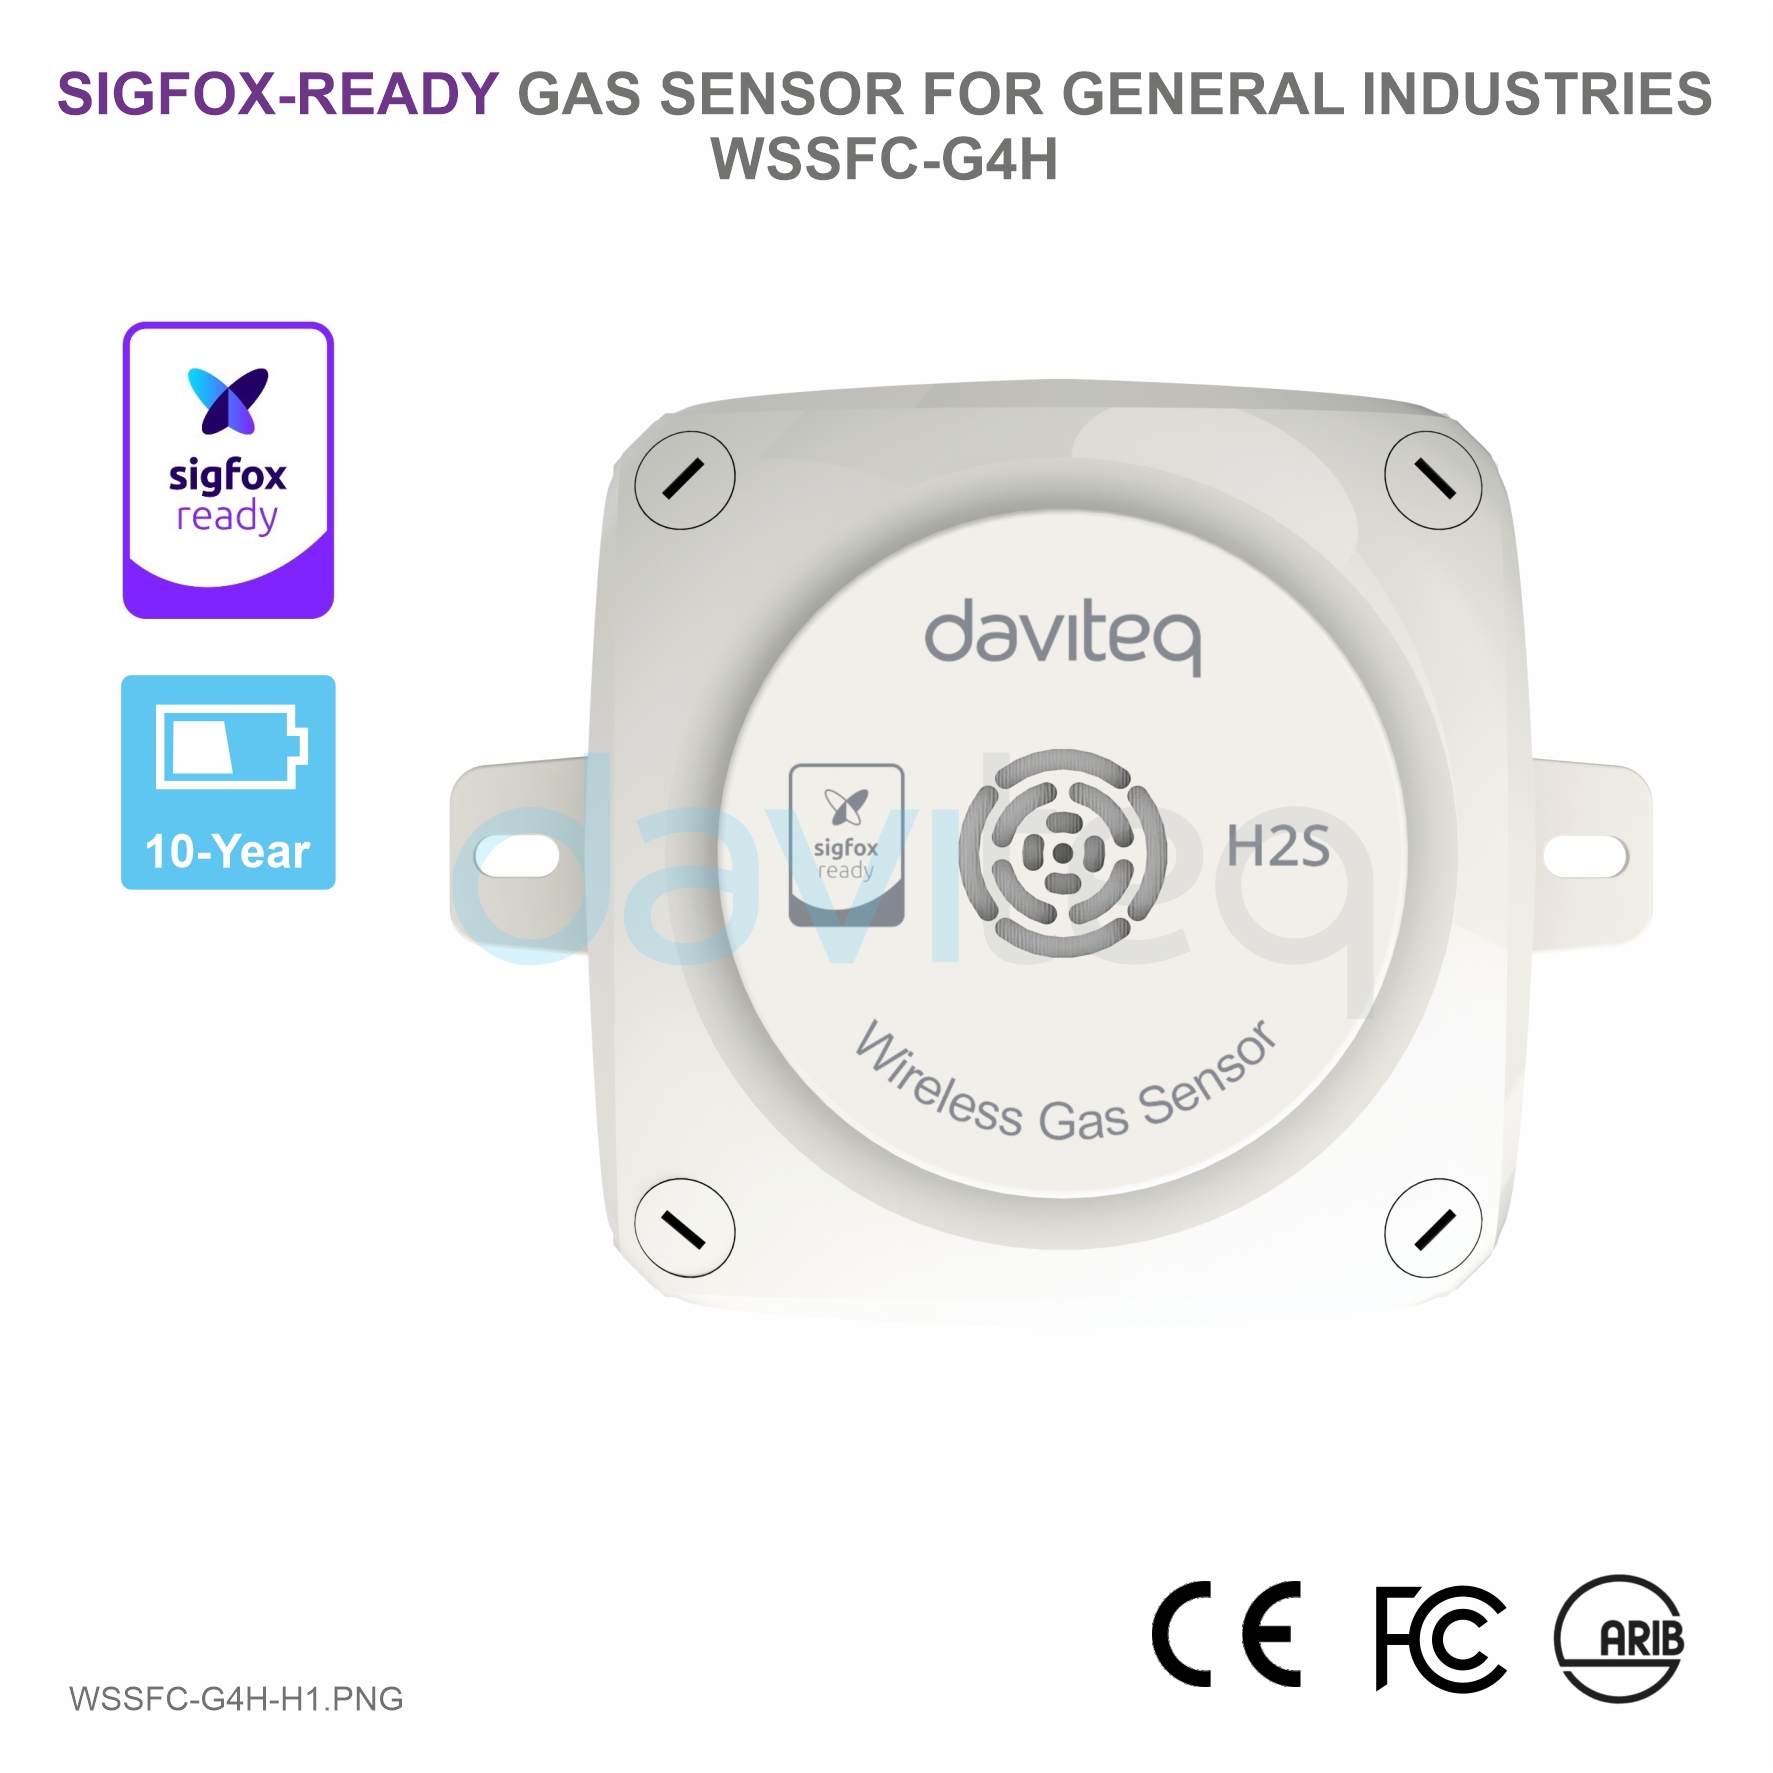 Sigfox-Ready Gas Sensor for General Industries